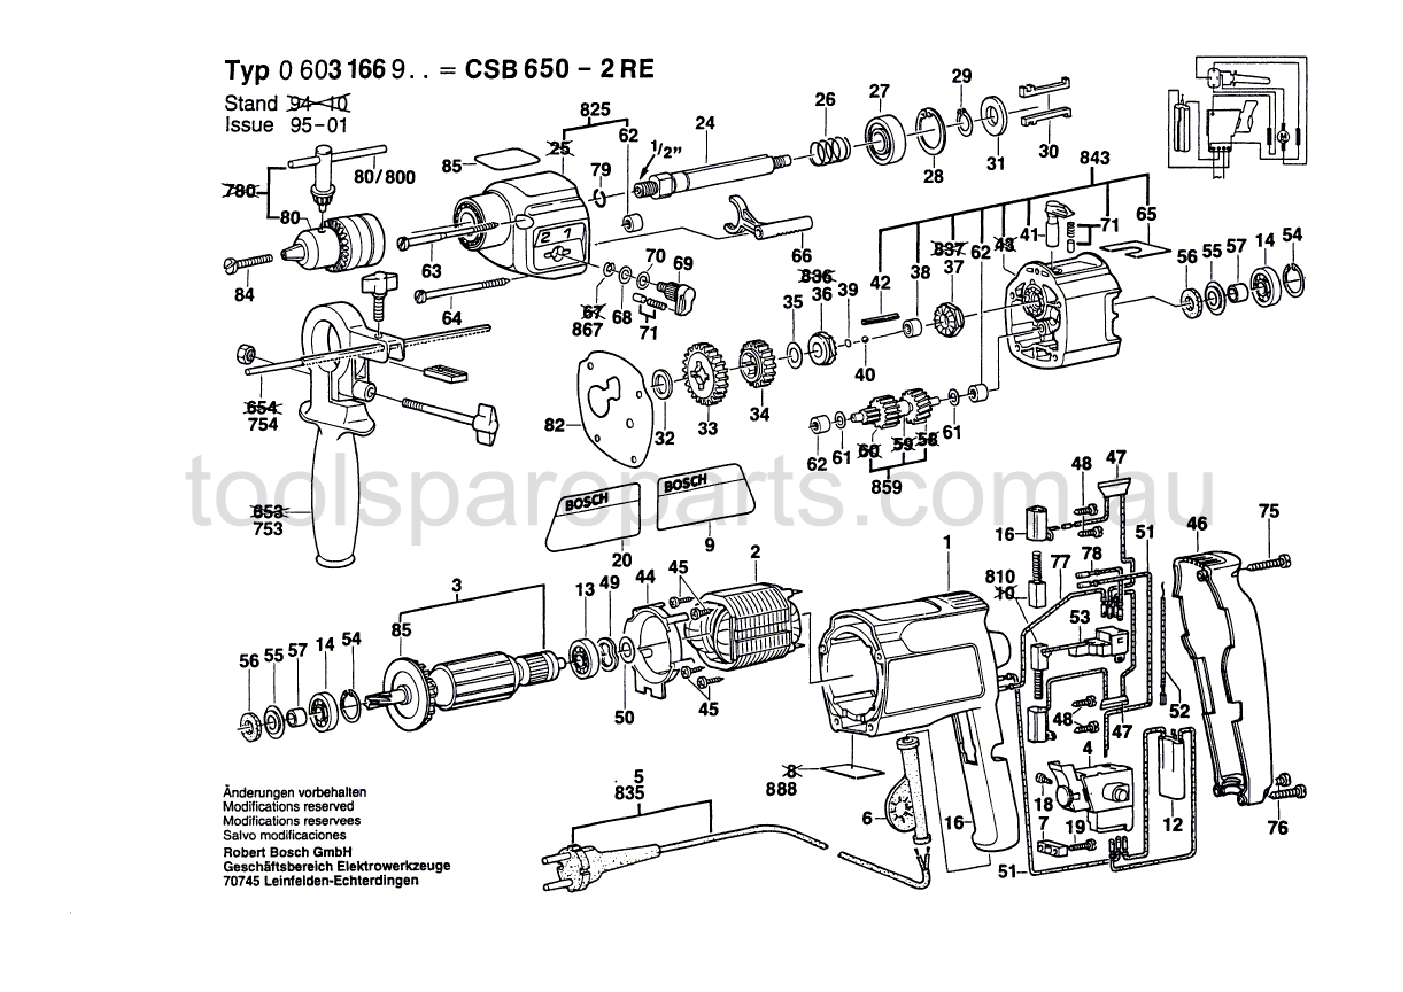 Bosch CSB 650-2 RE 0603166937  Diagram 1